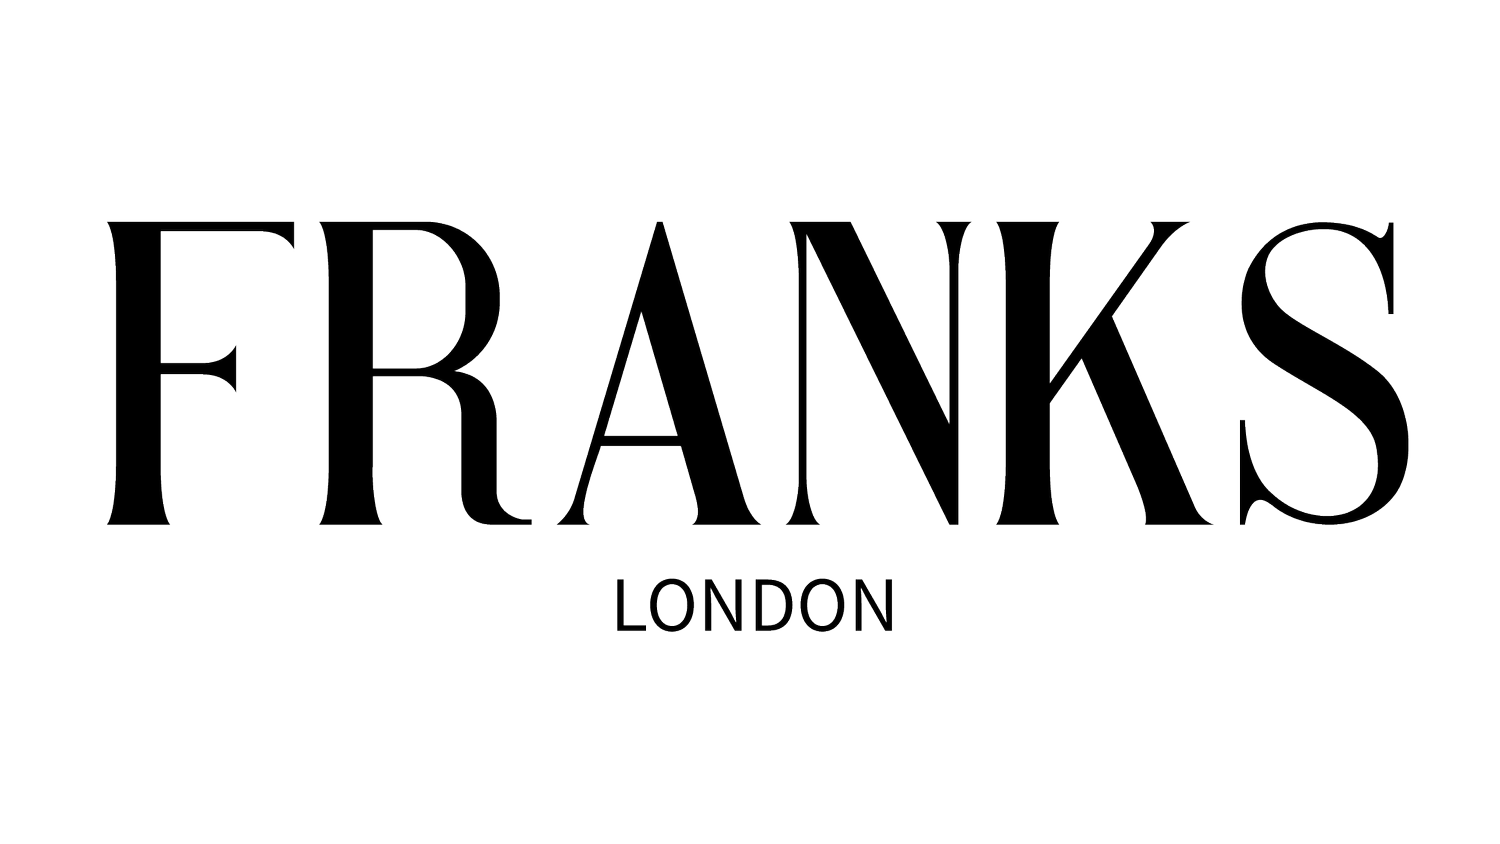 FRANKS LONDON